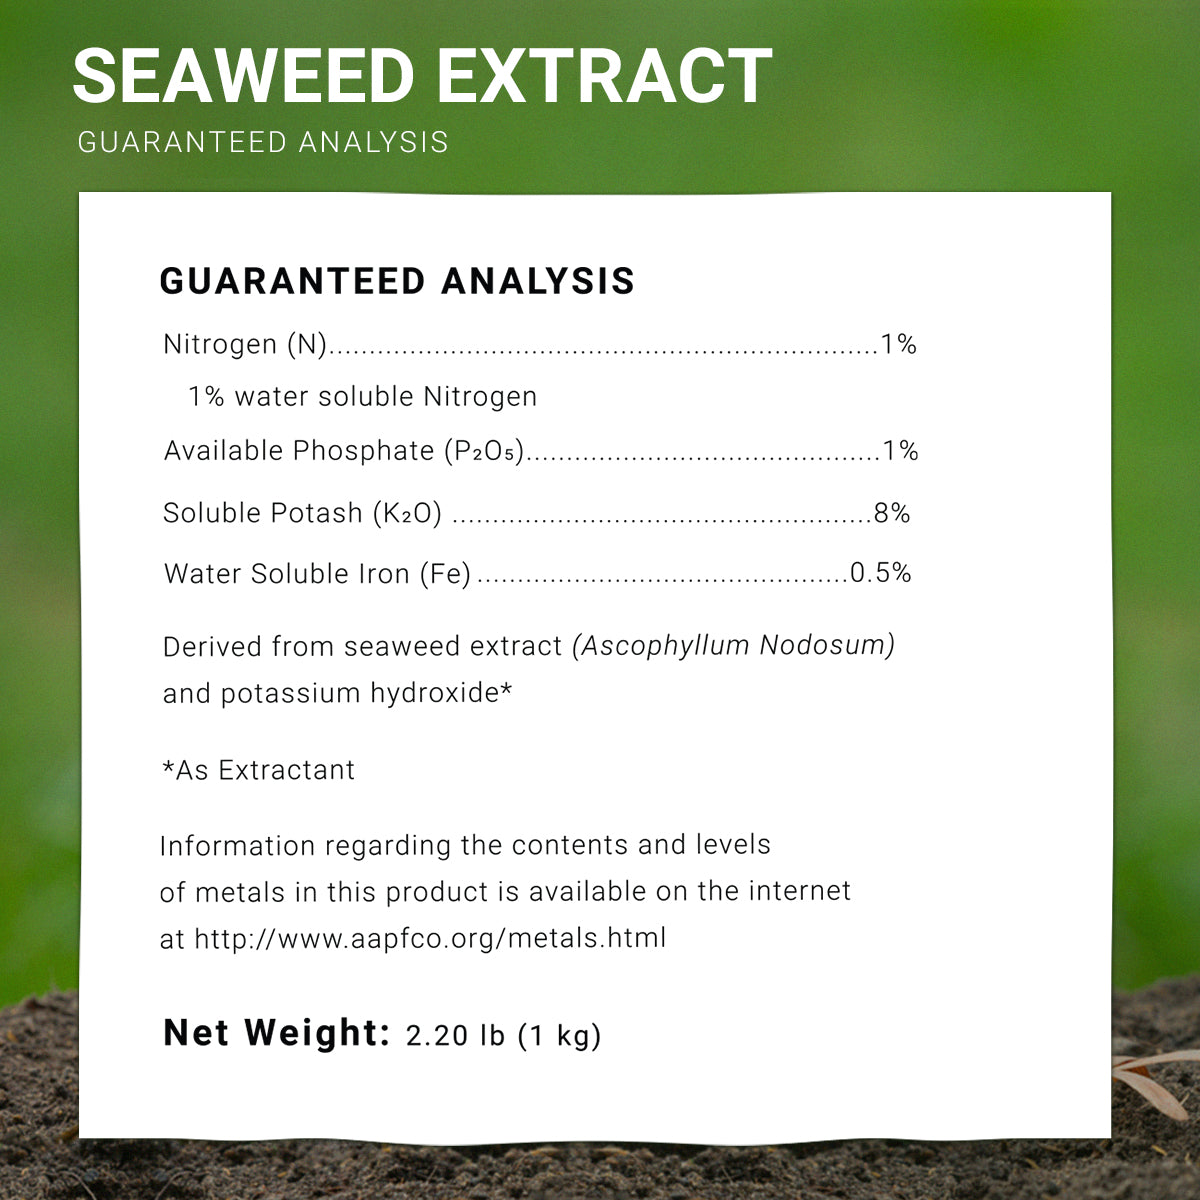 Seaweed Extract Fertilizer Information